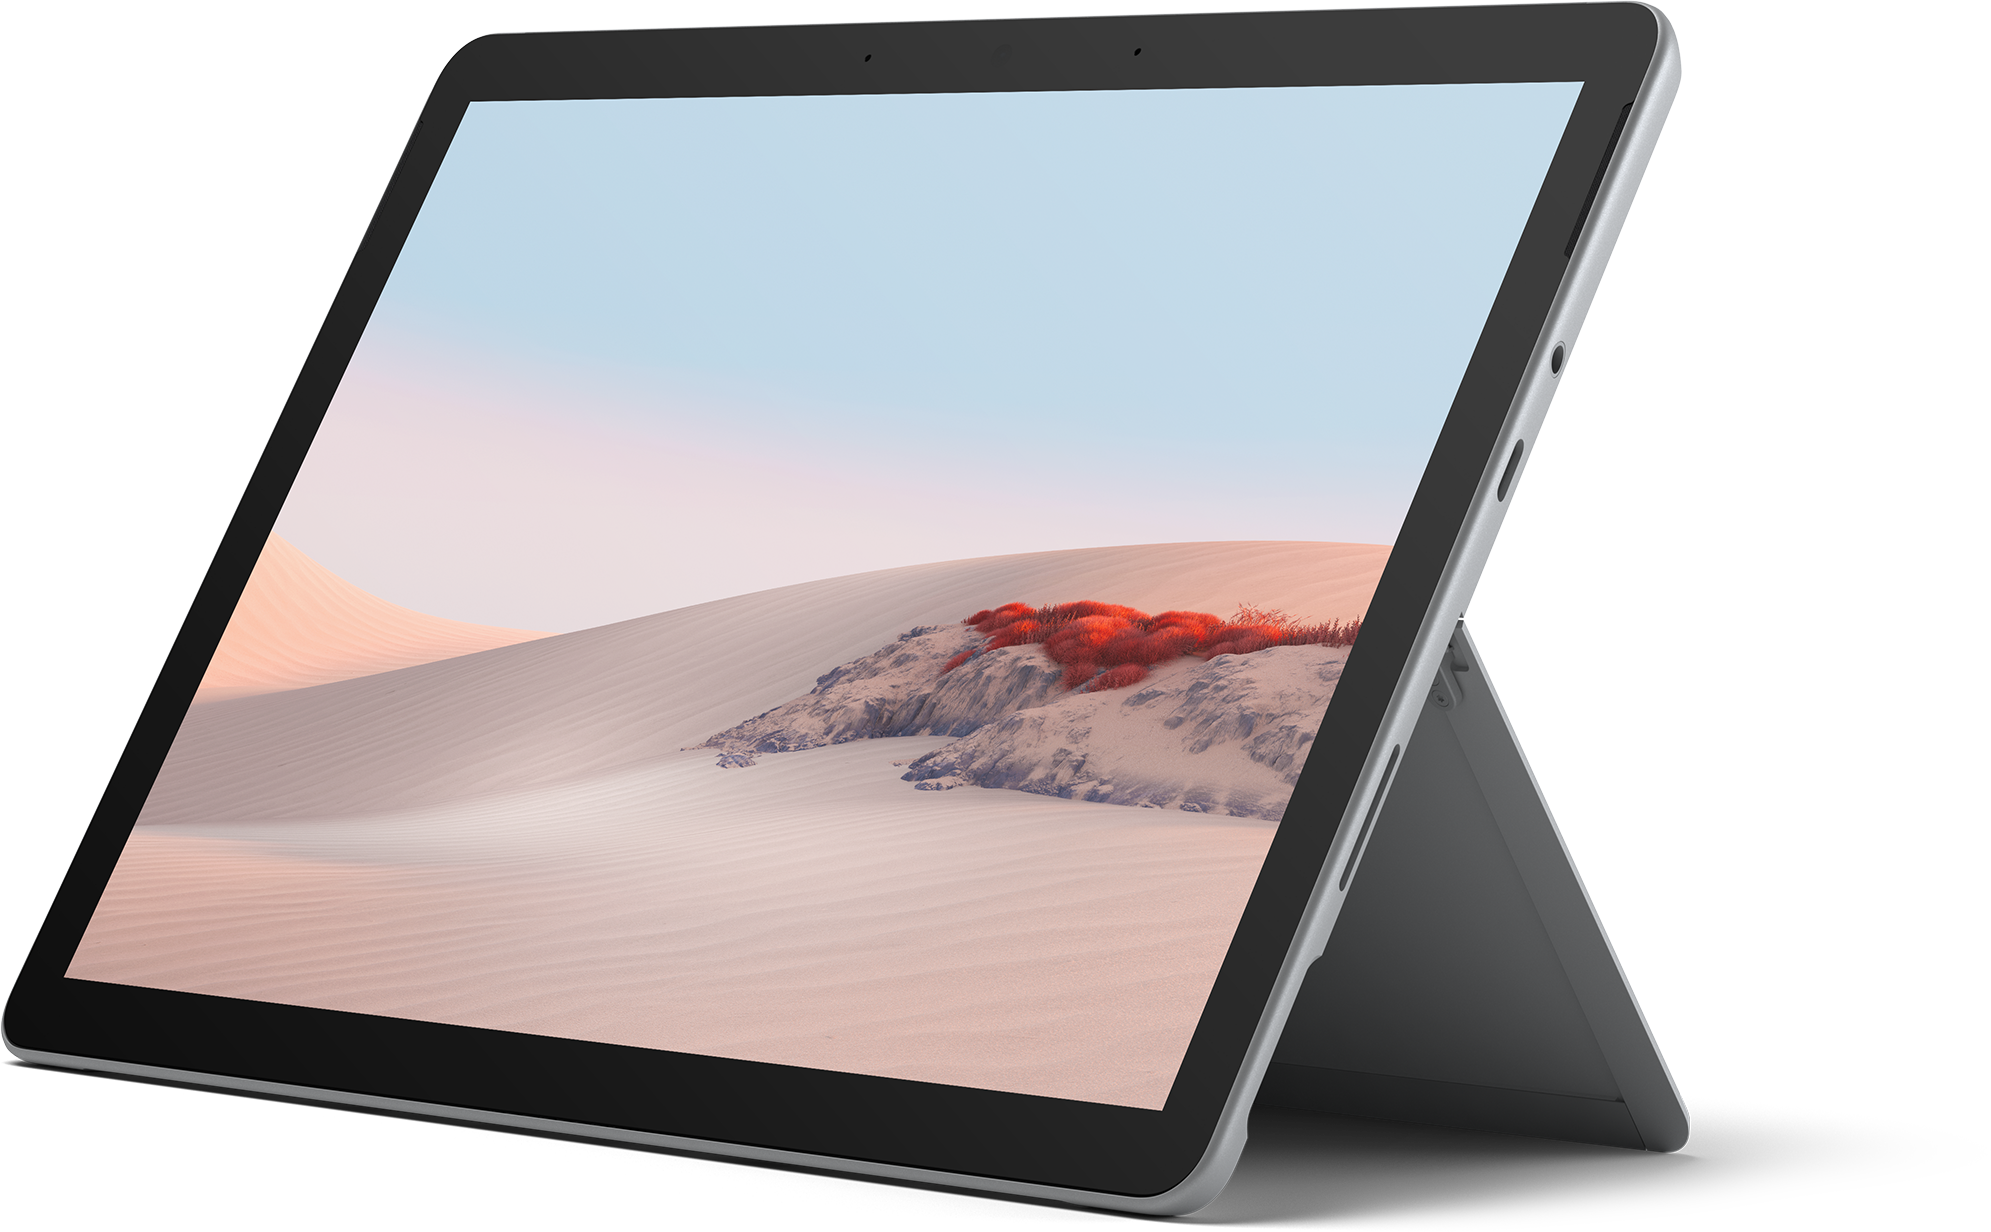 Offerta Microsoft Surface Go 2 su TrovaUsati.it